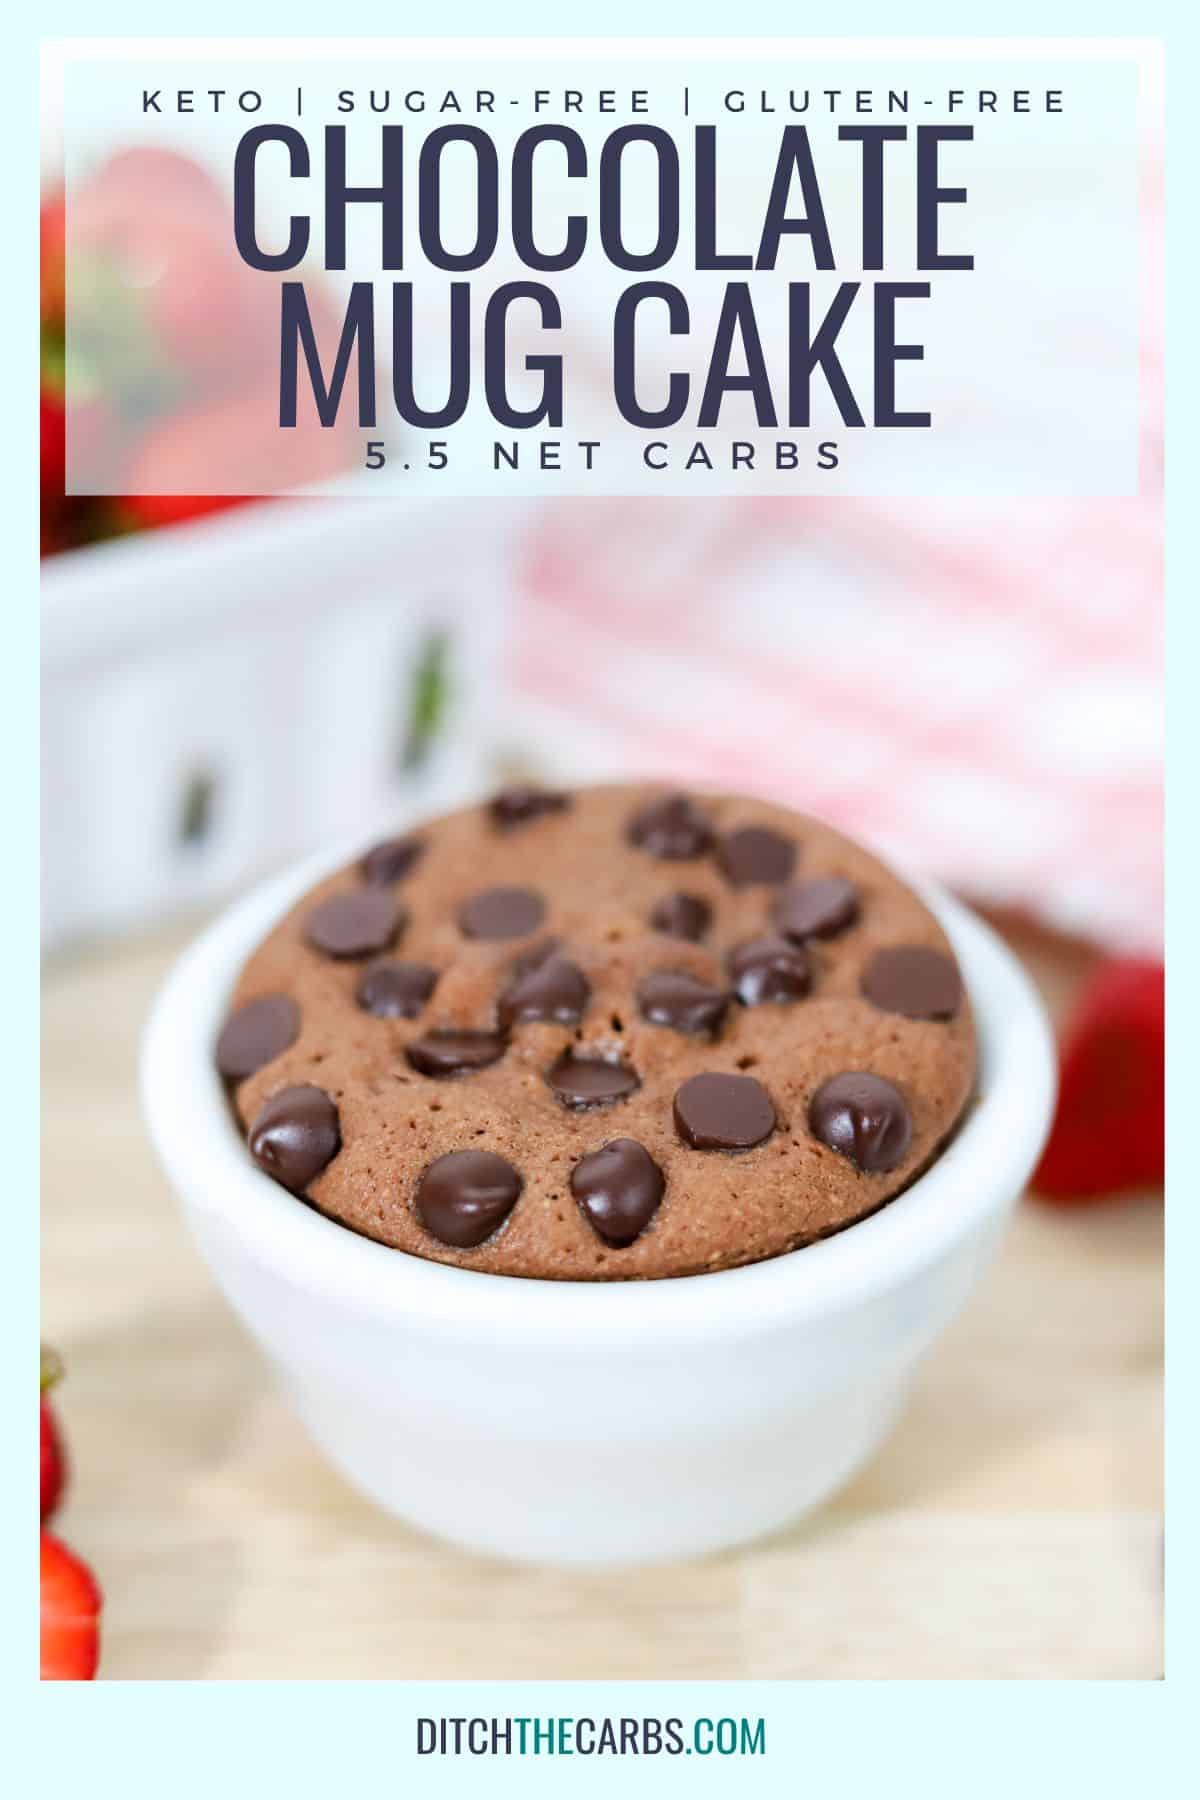 baked chocolate keto mug cake with sugar-free chocolate chips